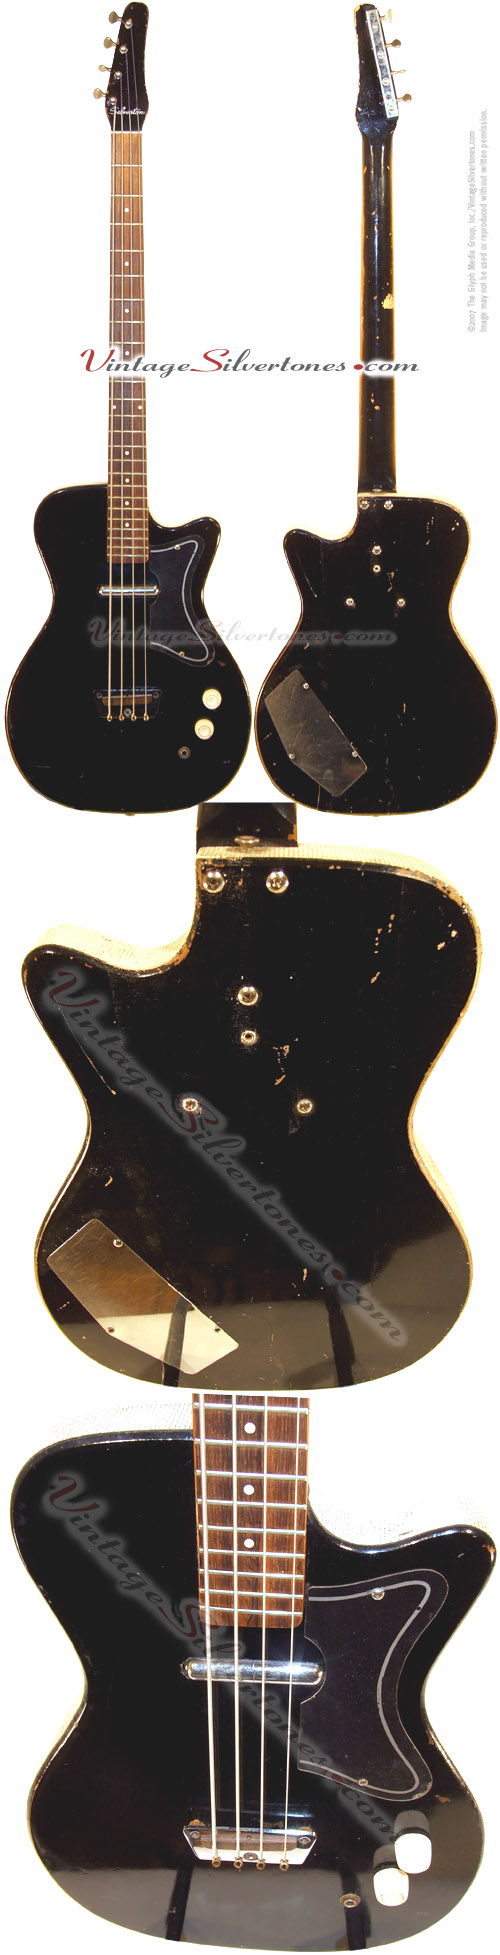 Silvertone Bass made by Danelectro model 1444 - U1 style - single pickup electric bass guitar